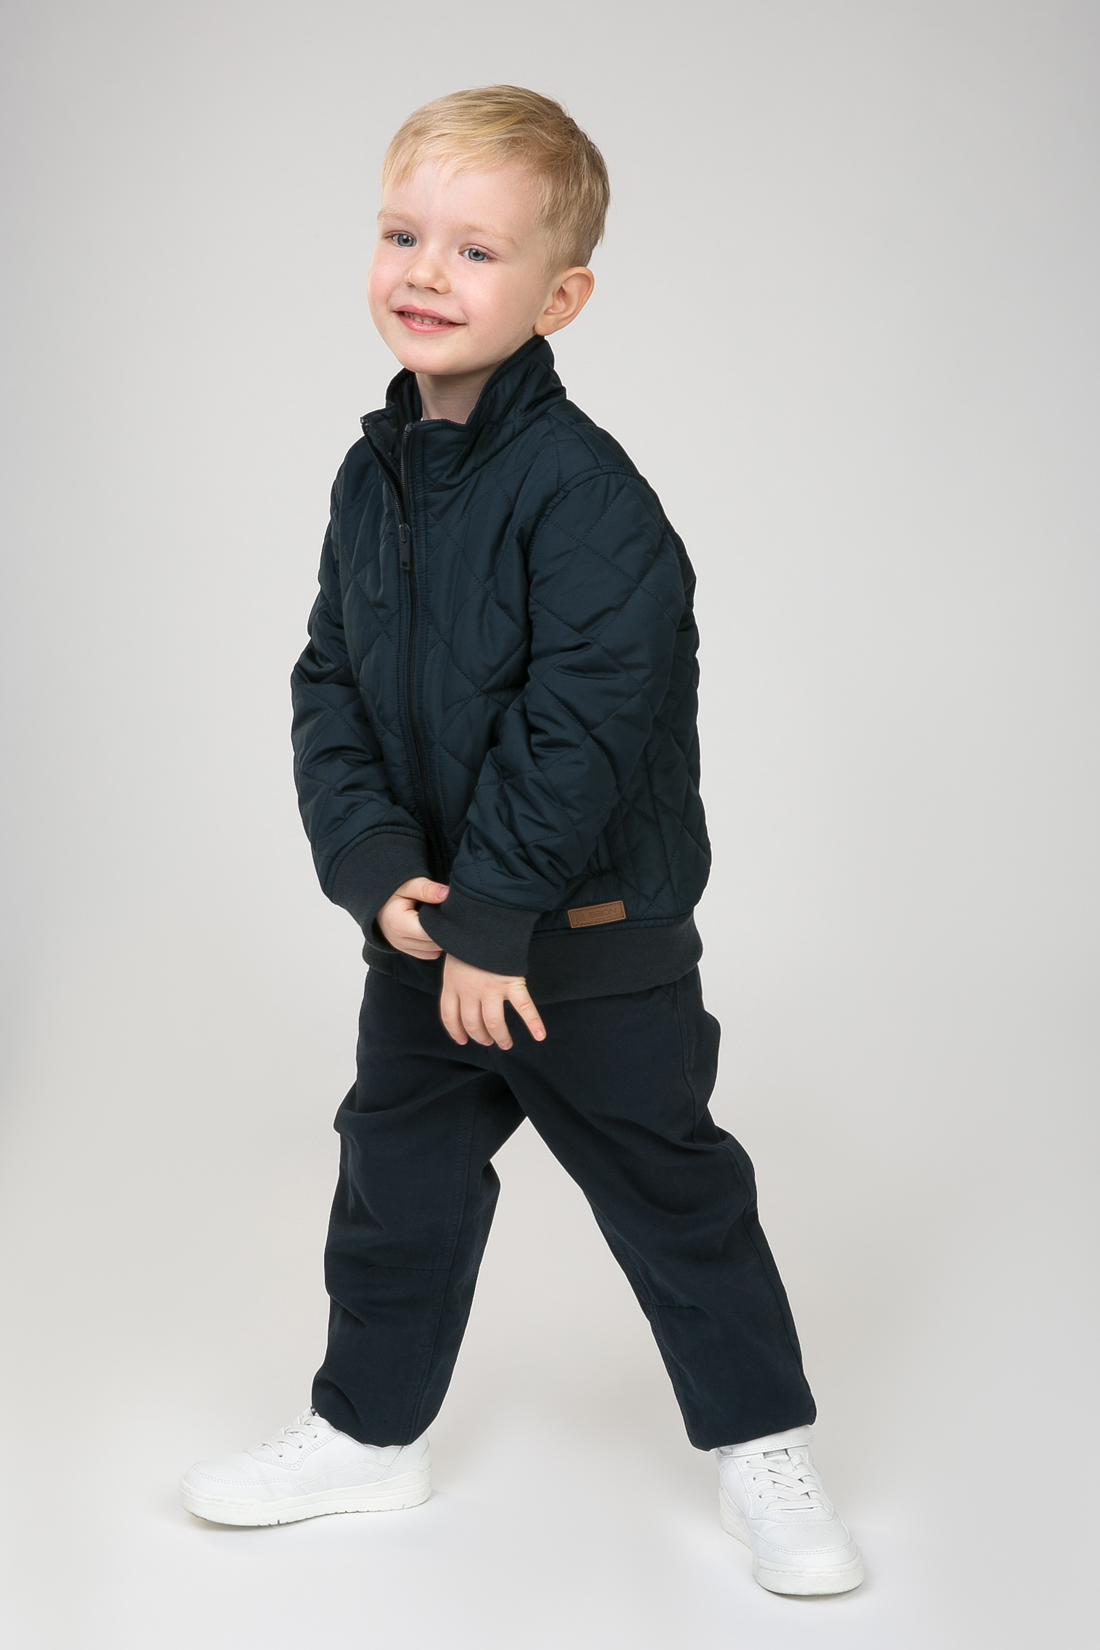 Куртка для мальчика (арт. baon BK538005), размер 98-104, цвет синий Куртка для мальчика (арт. baon BK538005) - фото 6